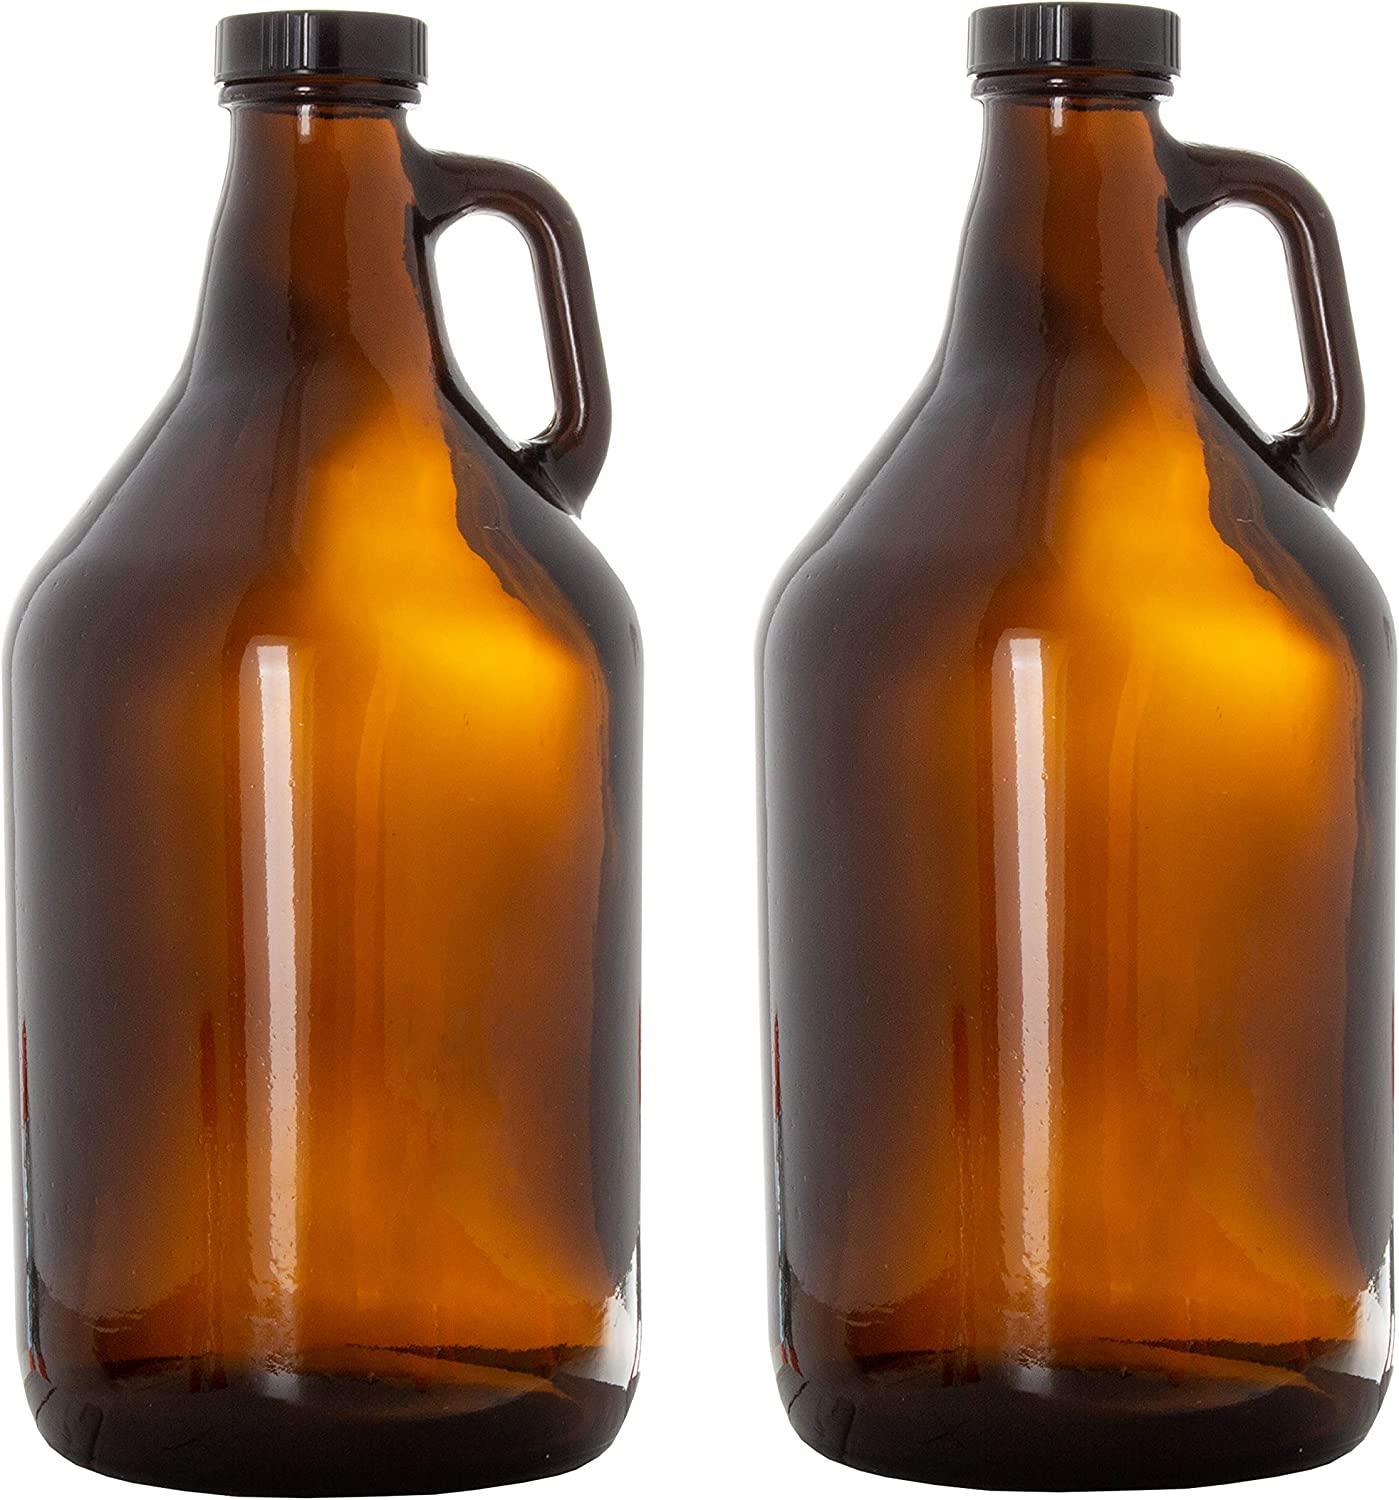 Ilyapa Ilyapa 12oz Clear Glass Beer Bottles for Home Brewing - 12